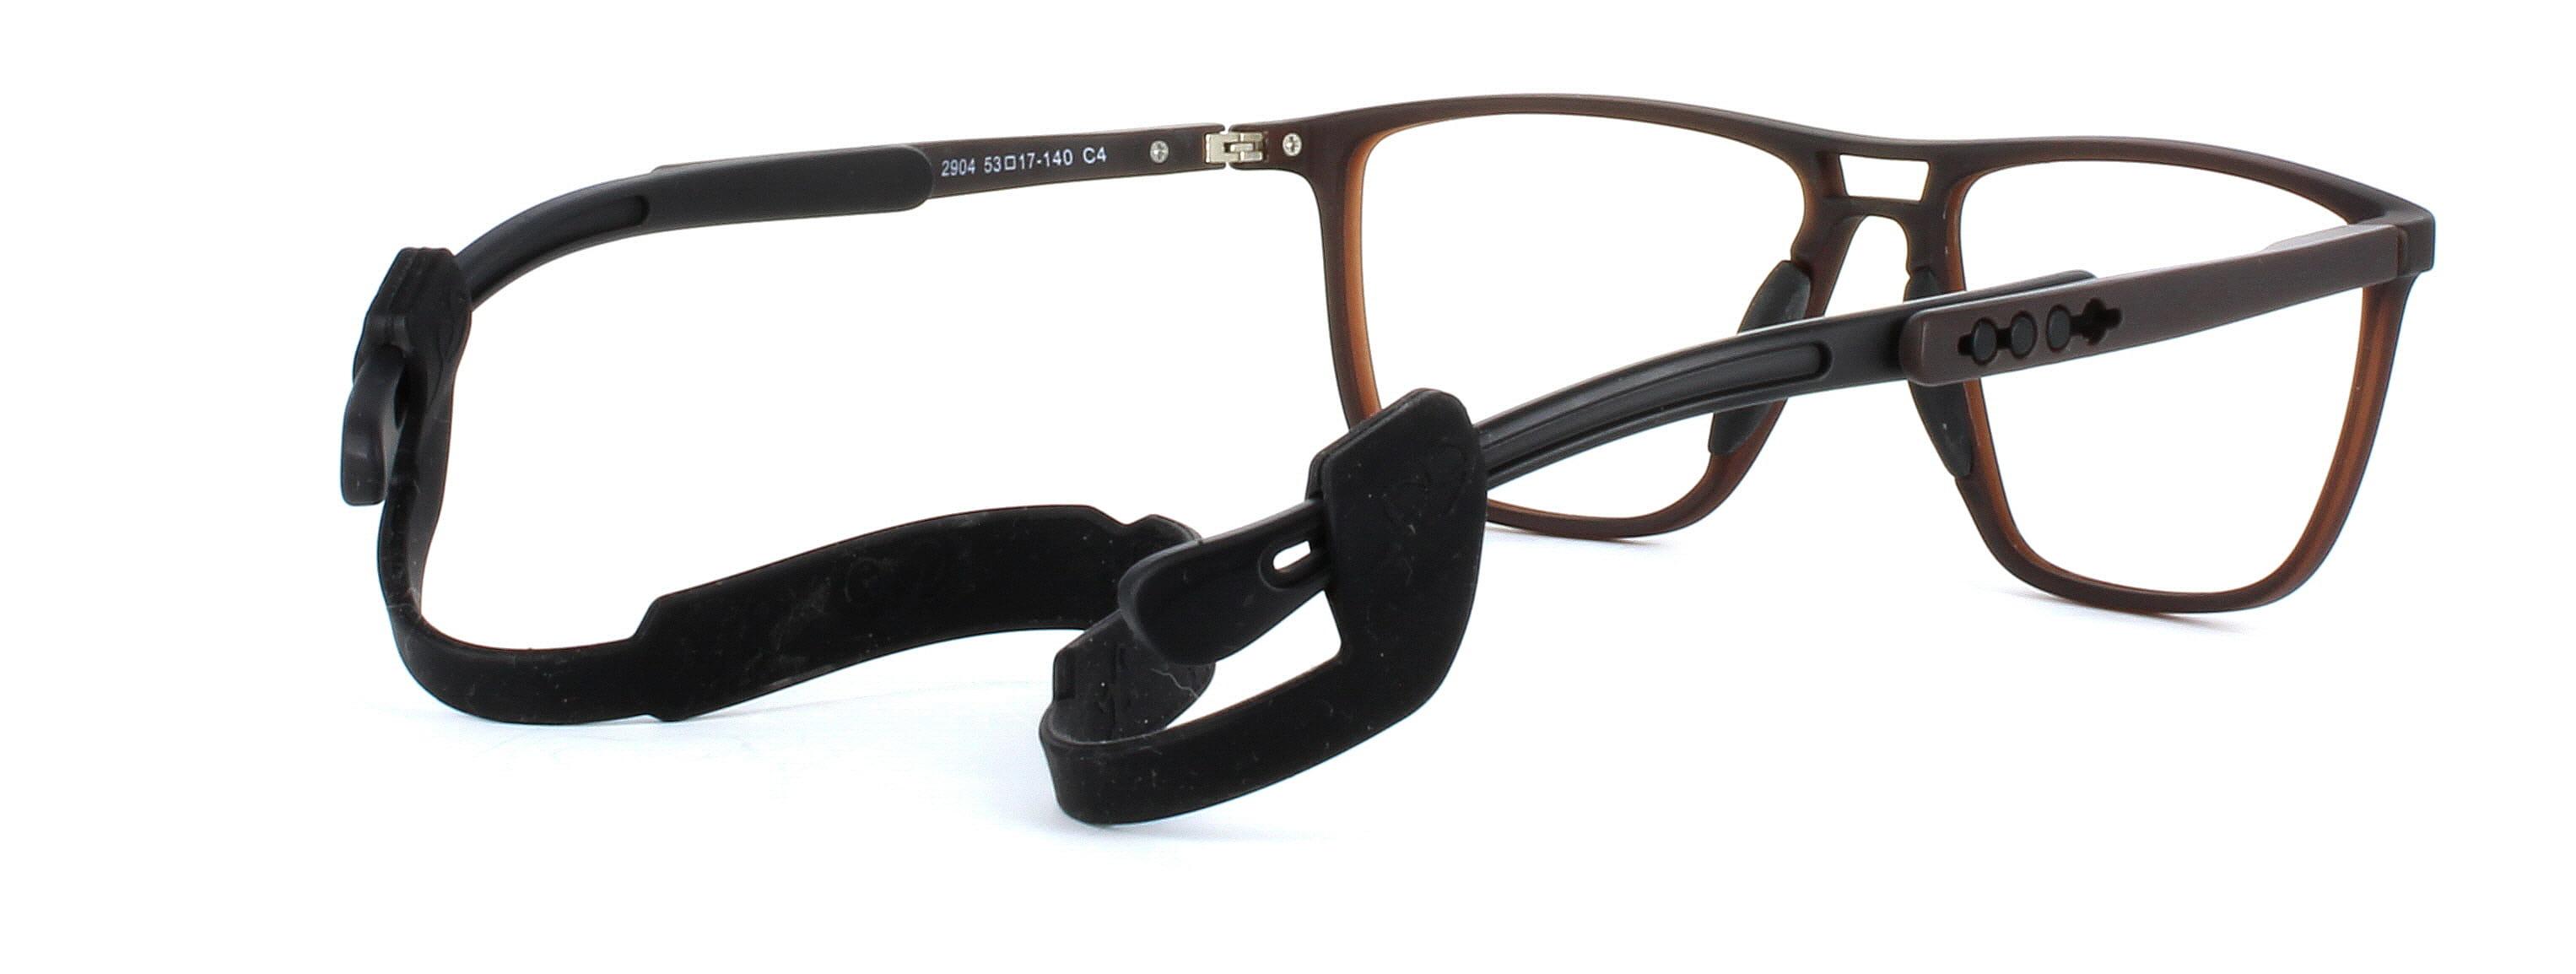 Decathlon - Men's prescription sports glasses frame in brown - image view 4